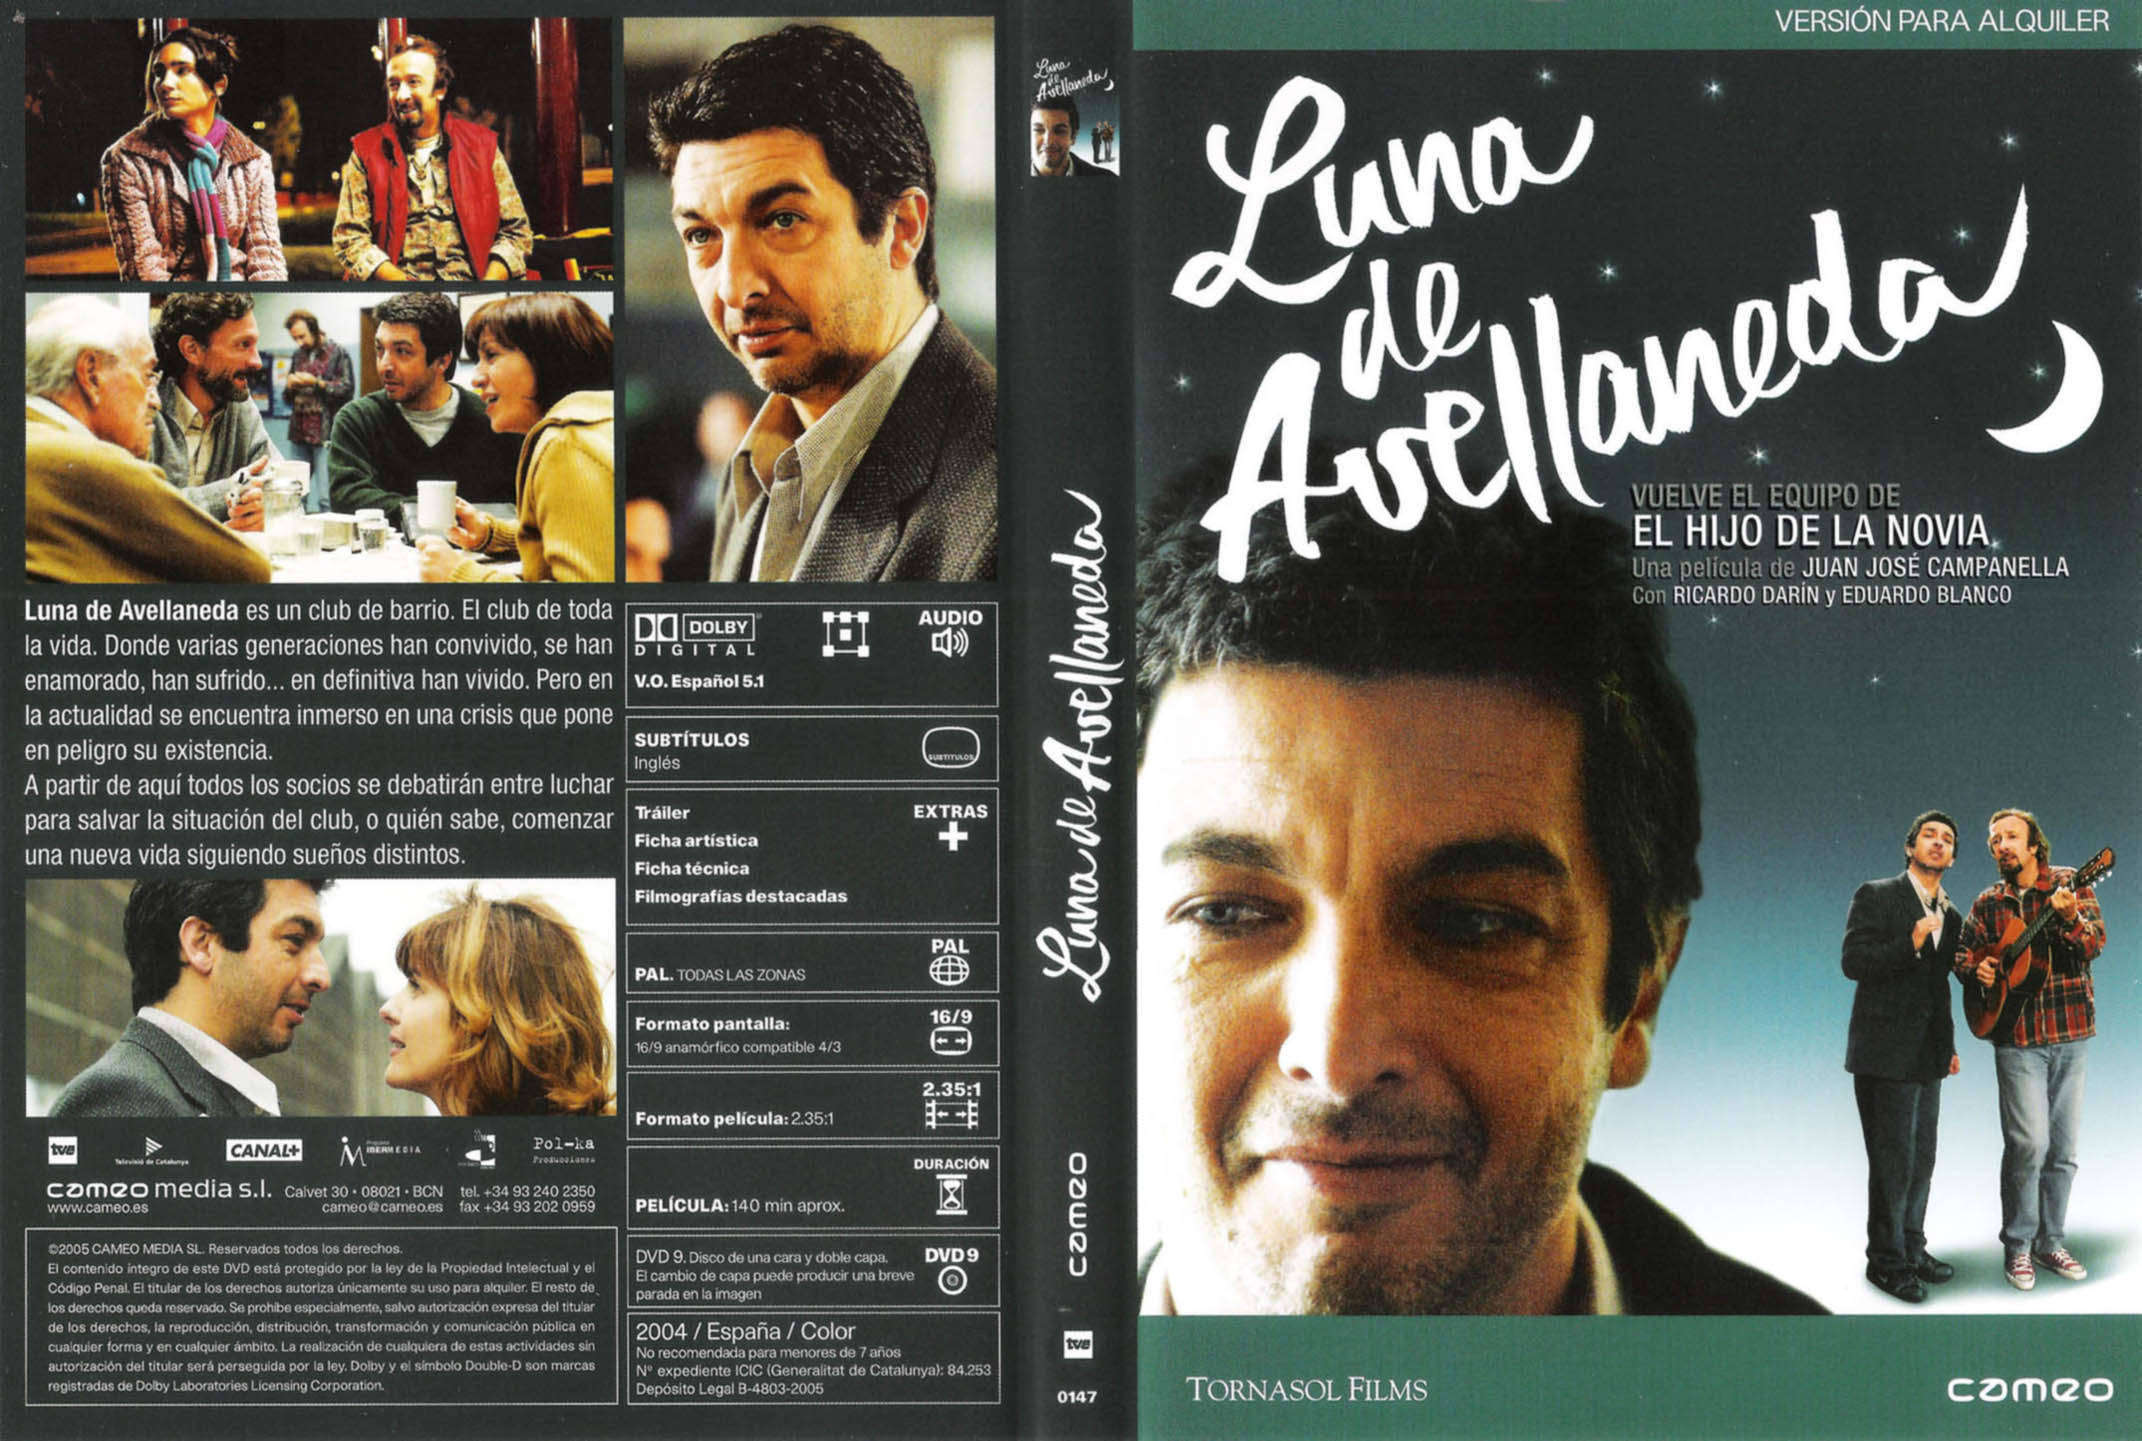 Luna de Avellaneda [MG][2004]